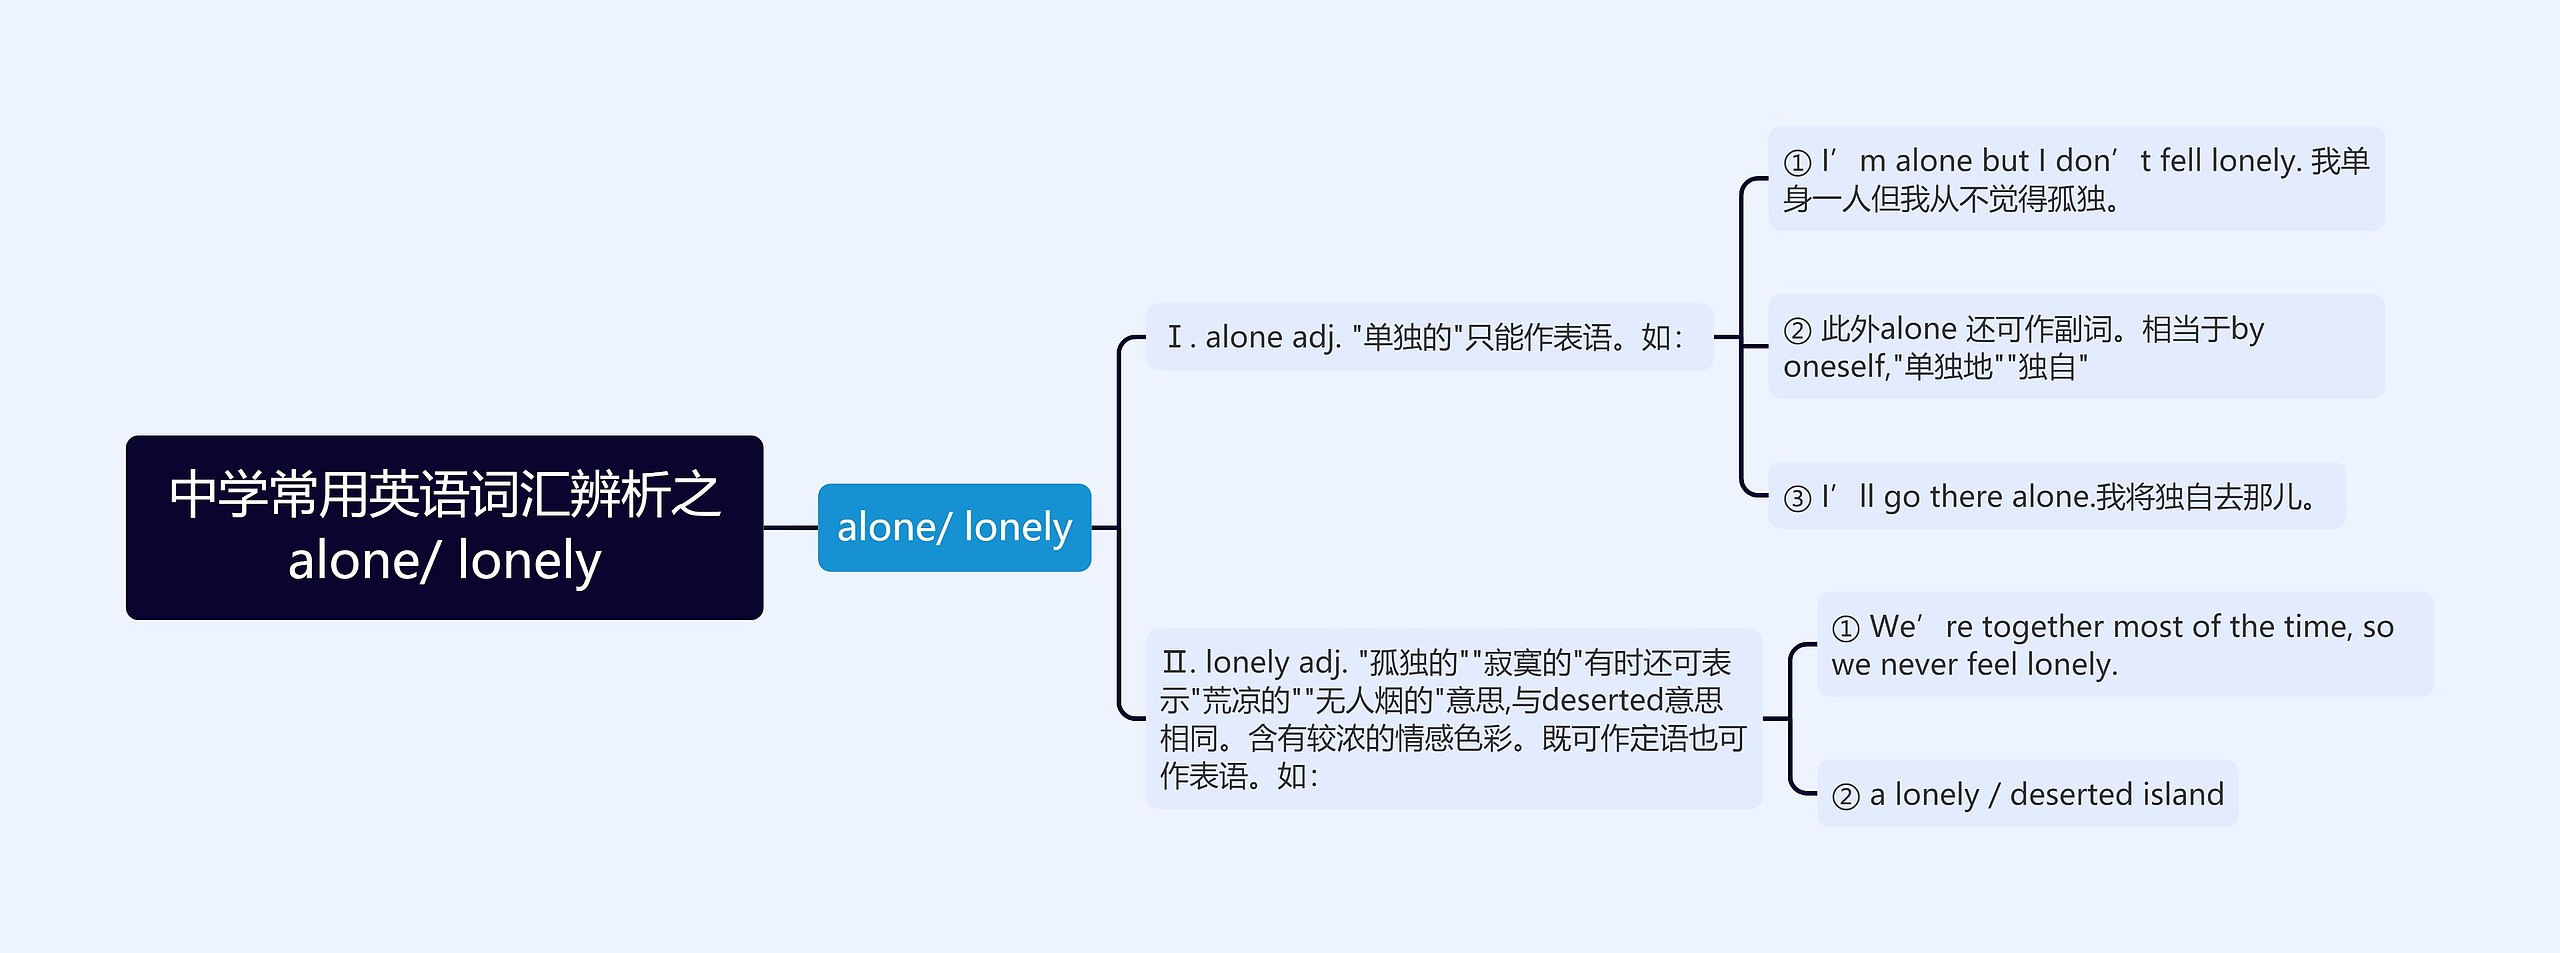 中学常用英语词汇辨析之alone/ lonely